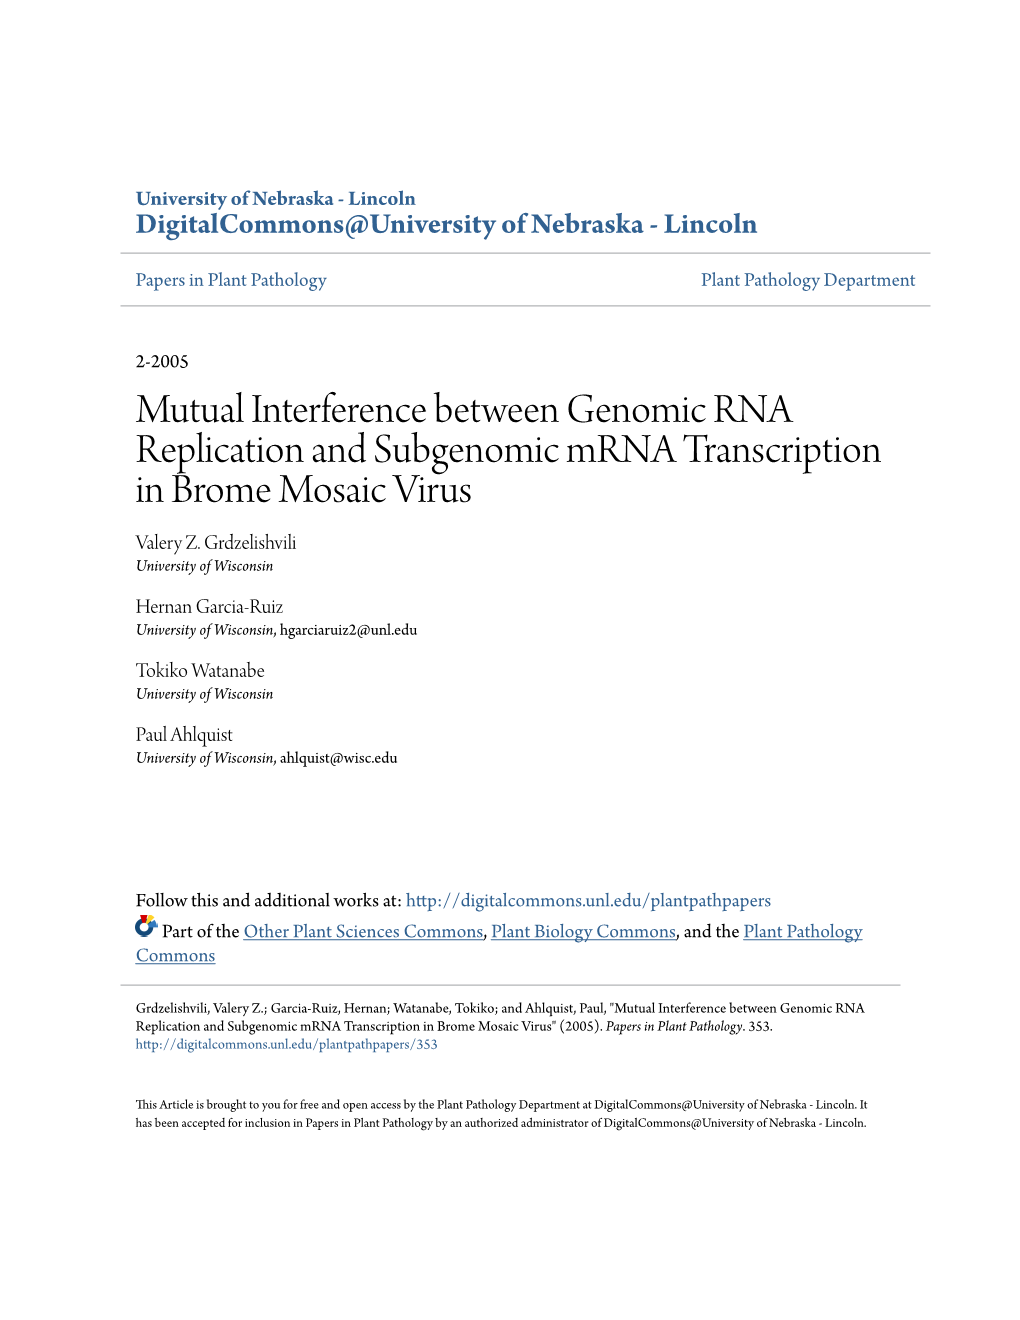 Mutual Interference Between Genomic RNA Replication and Subgenomic Mrna Transcription in Brome Mosaic Virus Valery Z